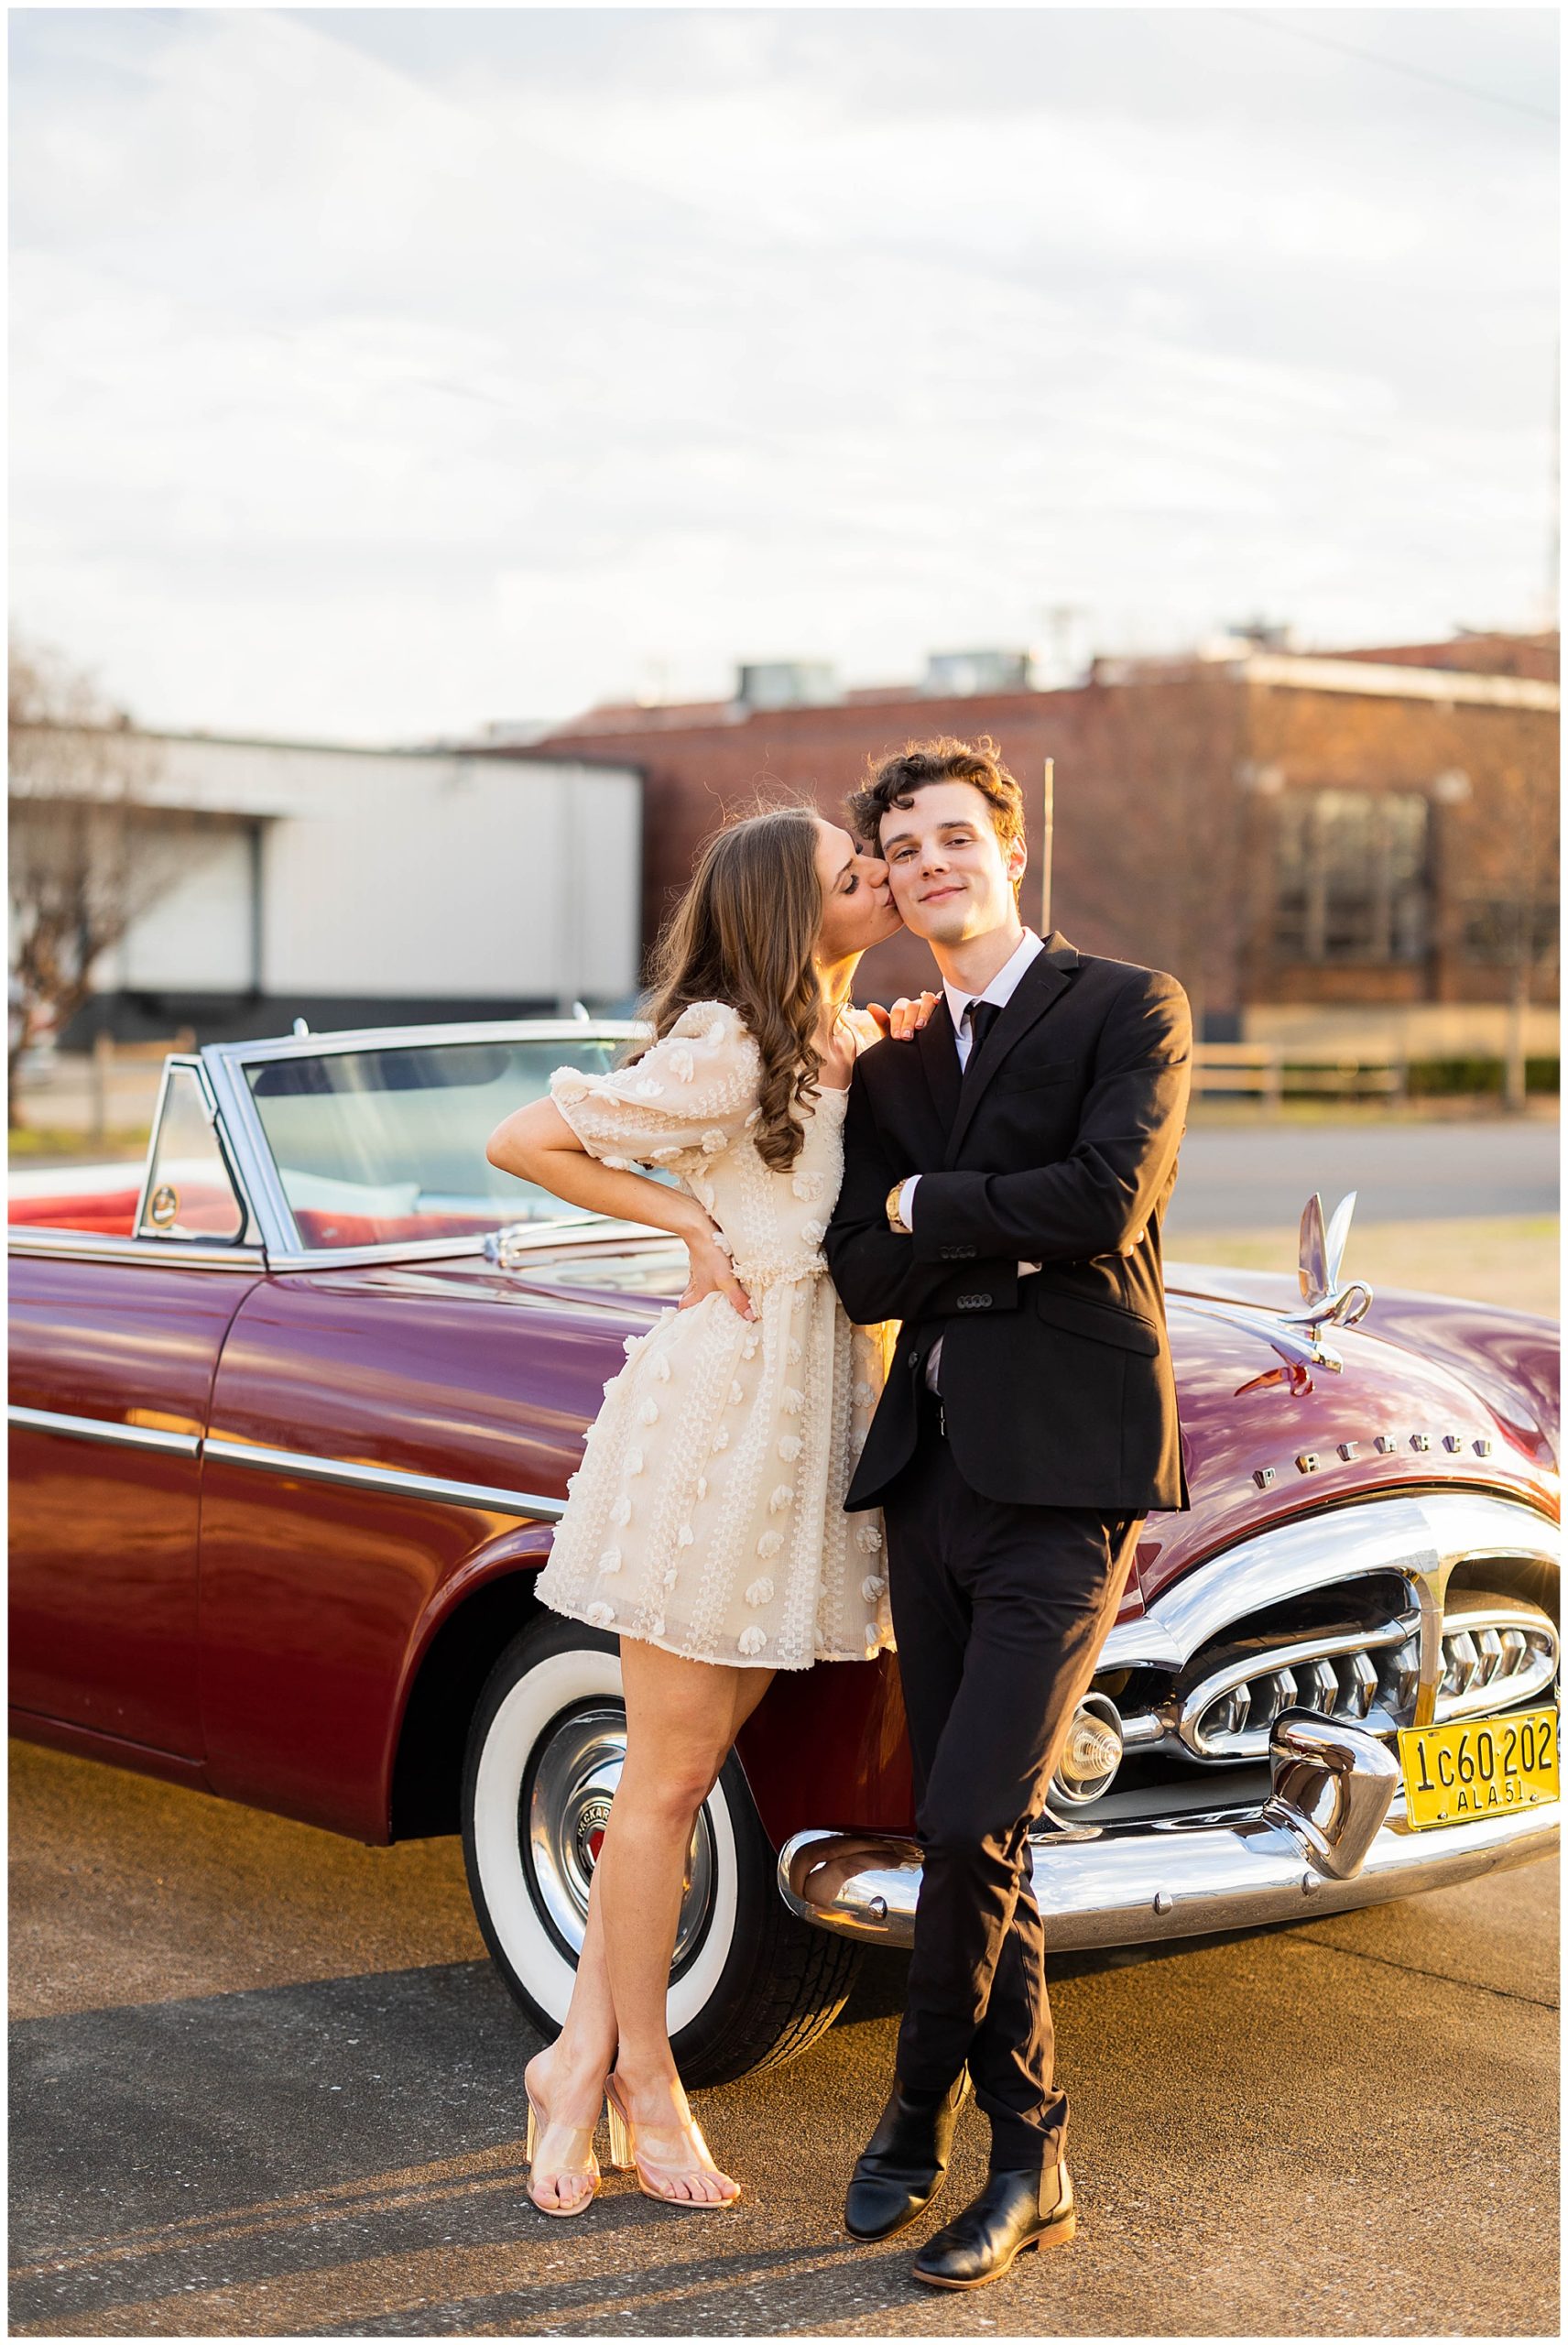 Eleanor Stenner Photography - a Birmingham, AL wedding photographer - photographs Rachel and Brandon, the winners of her Valentine's Day Photoshoot